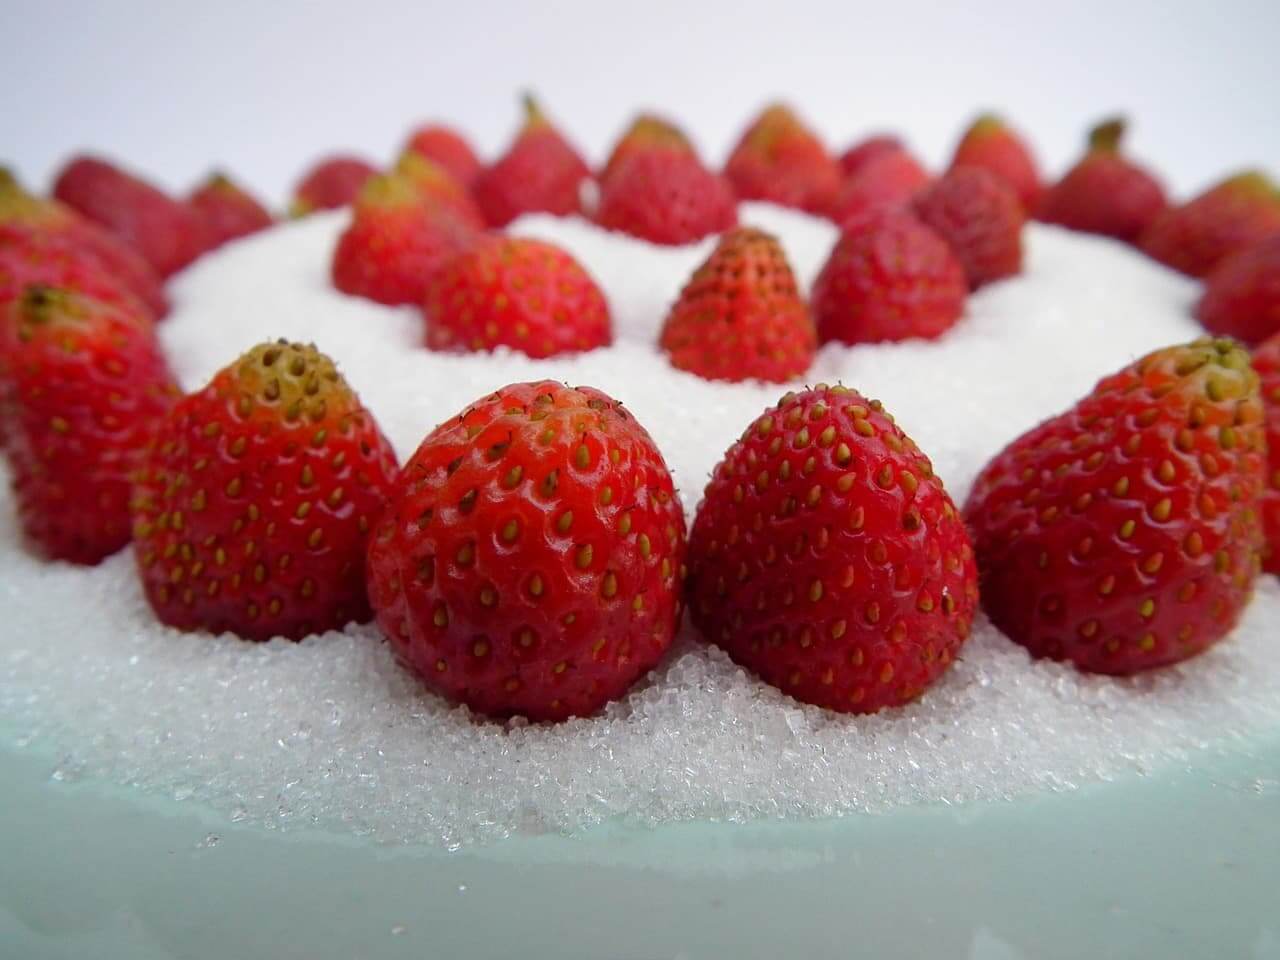 strawberries_azucar